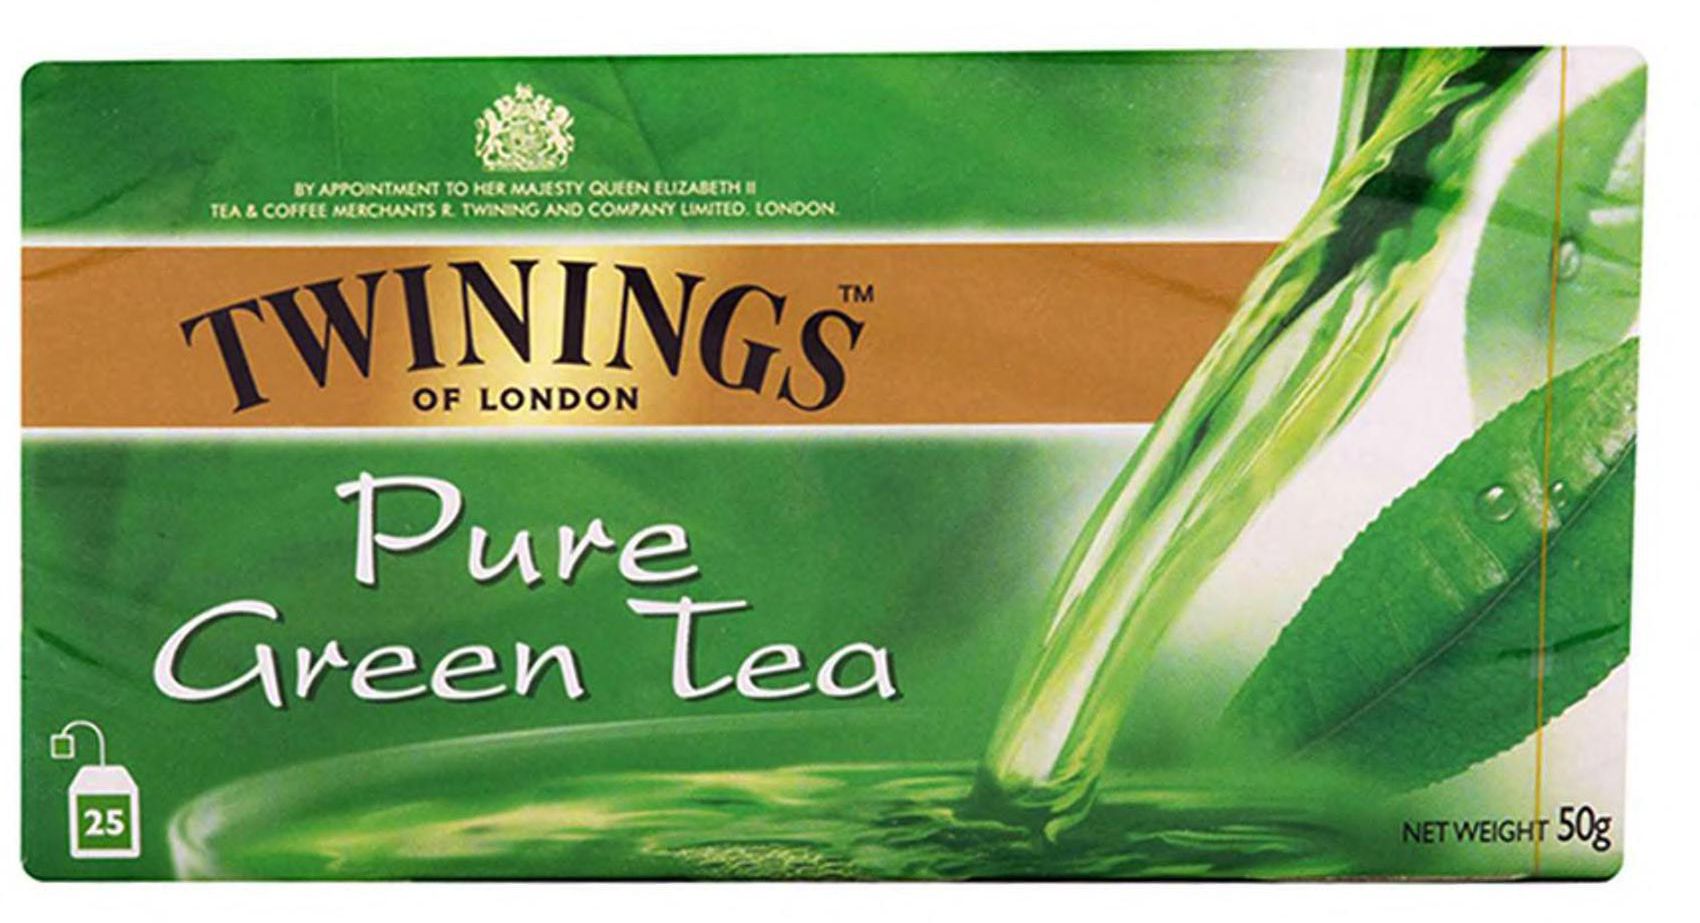 Twinings Pure Green Tea Bag 25 bage x 2 g